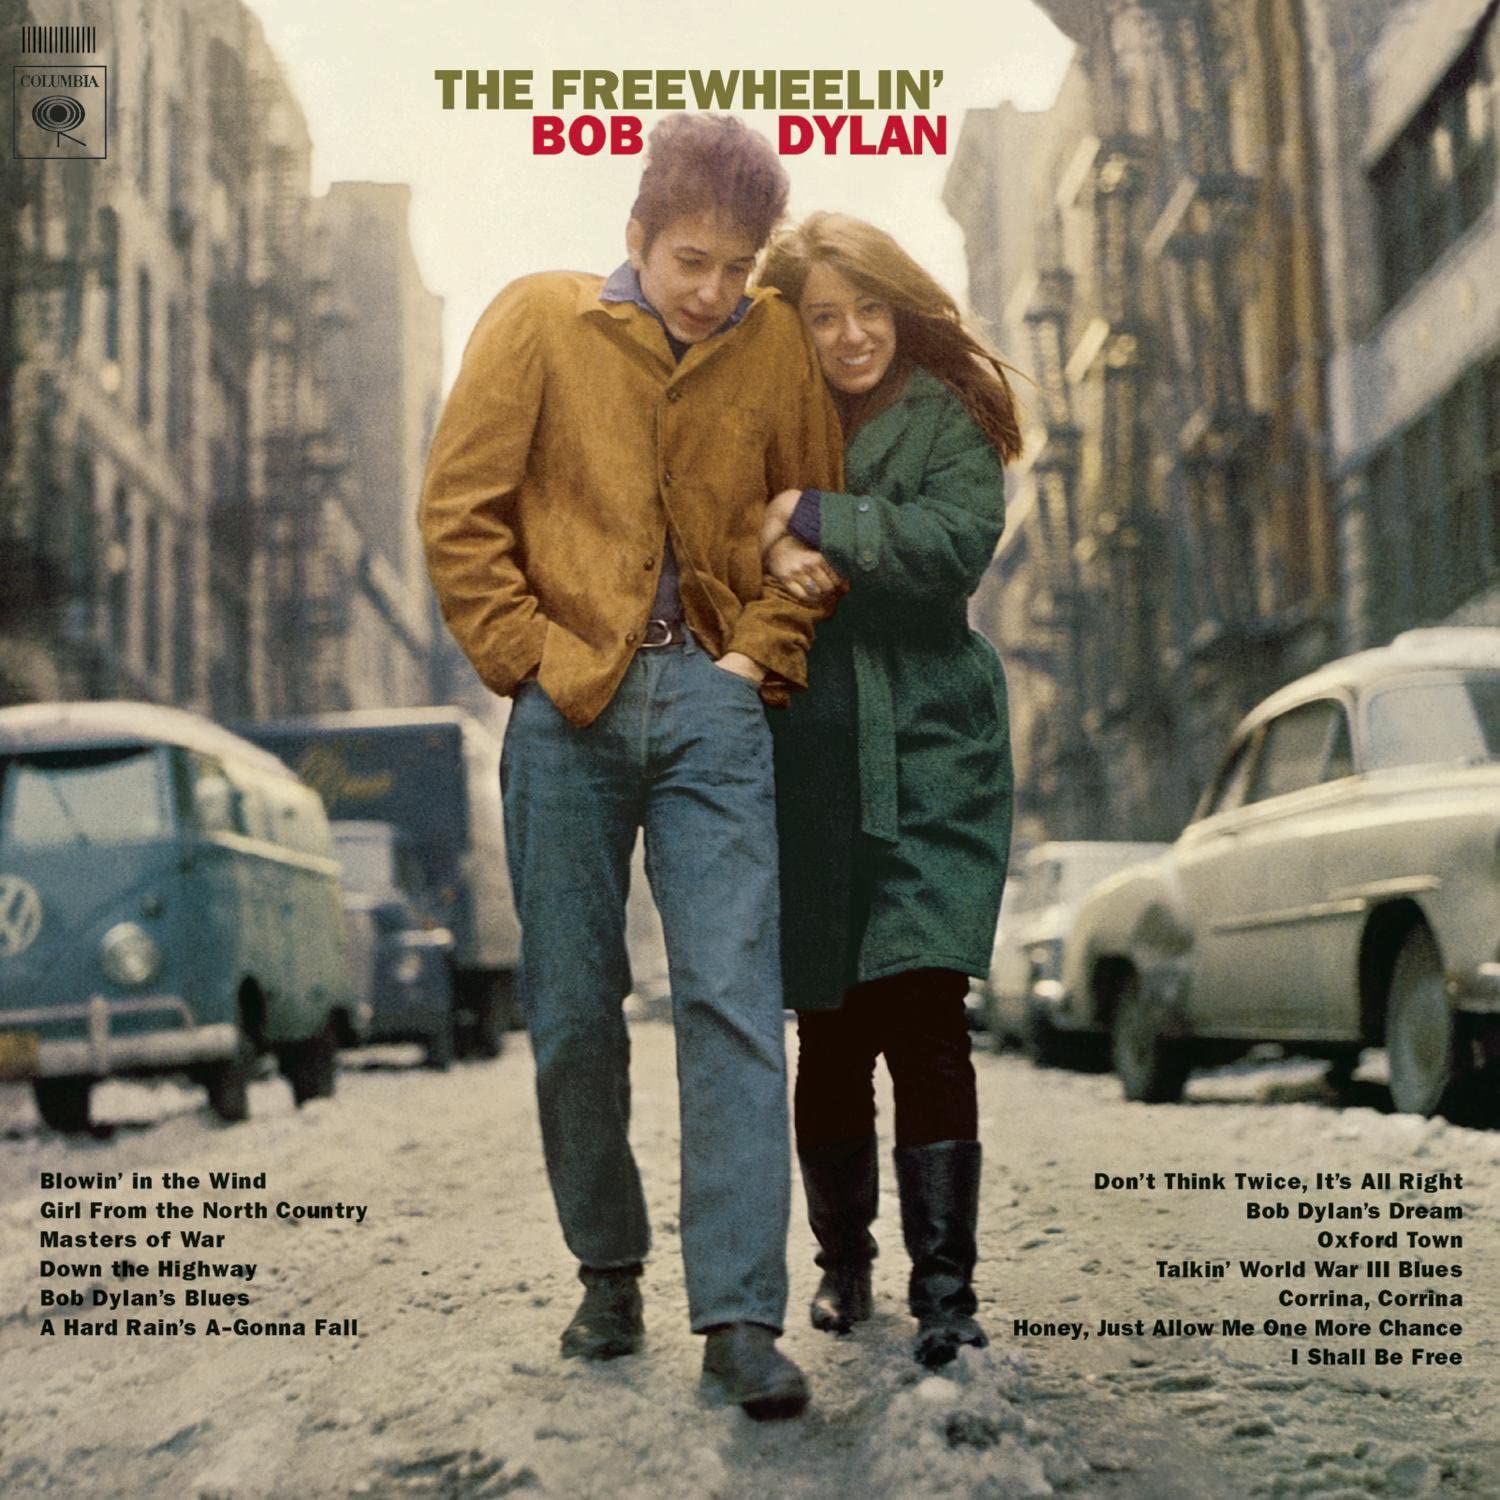 Bob Dylan on The Freewheelin’ album cover